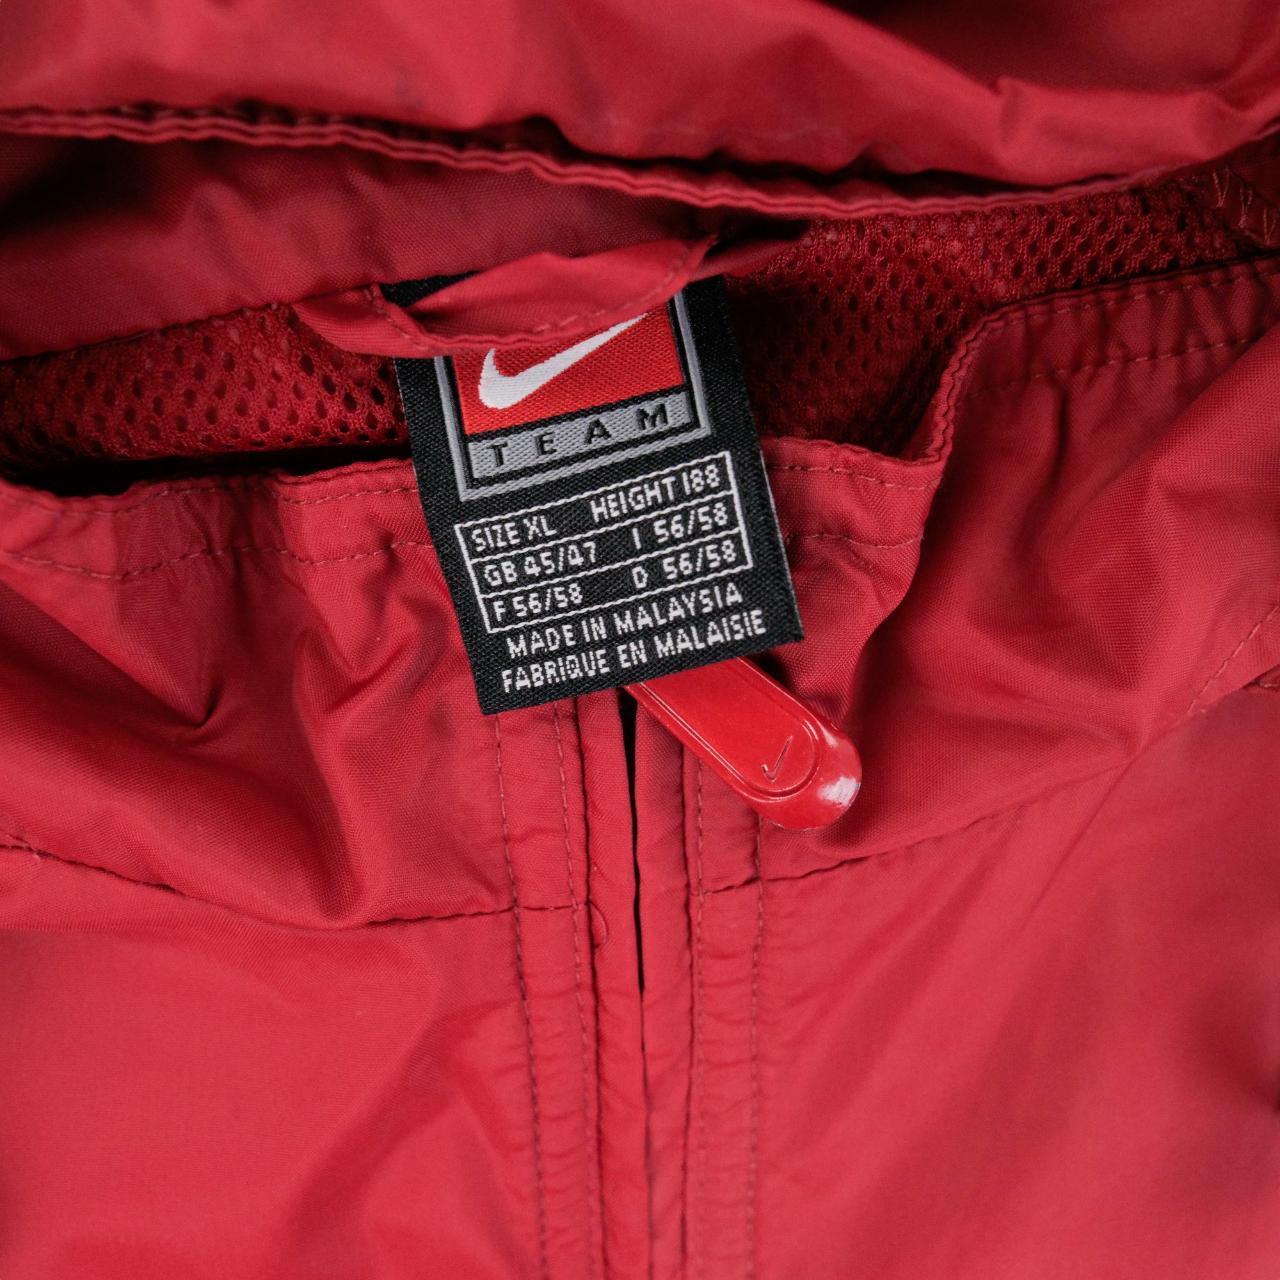 Vintage Nike Jacket Size XL - Known Source